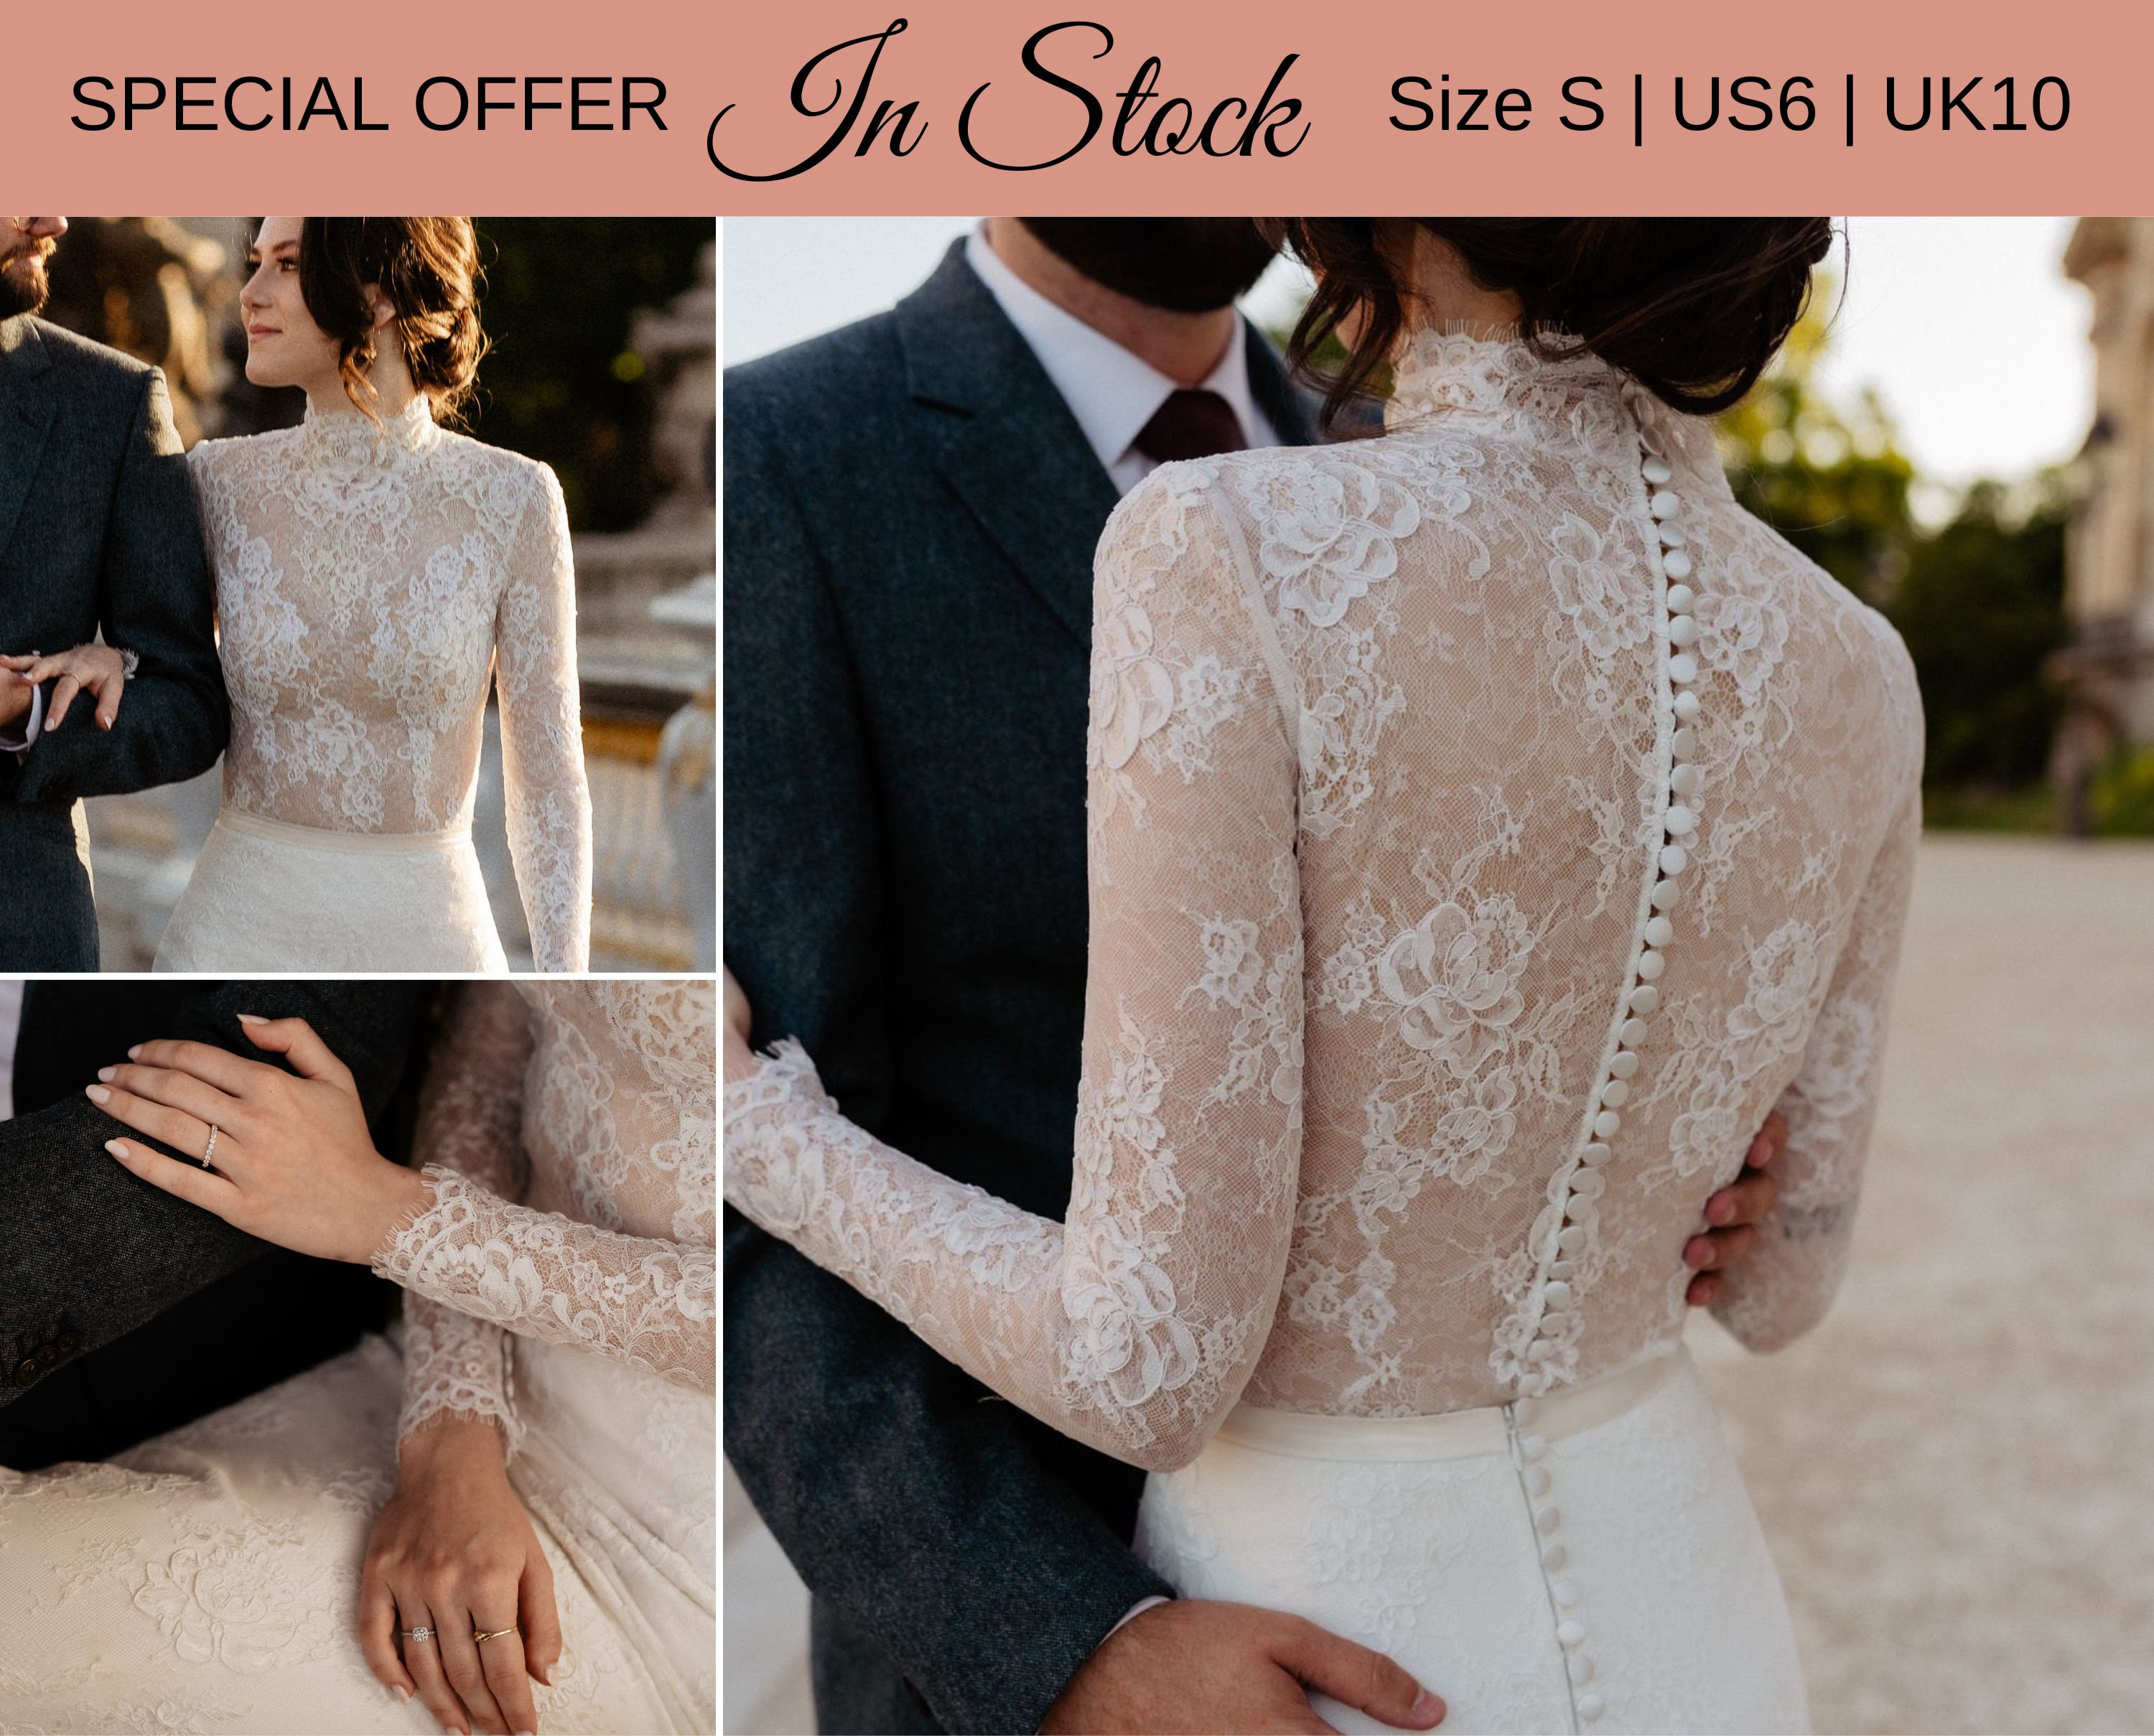 Buy Bridal Bodysuit Size S/US6 Express Shipping Wedding Bodysuit